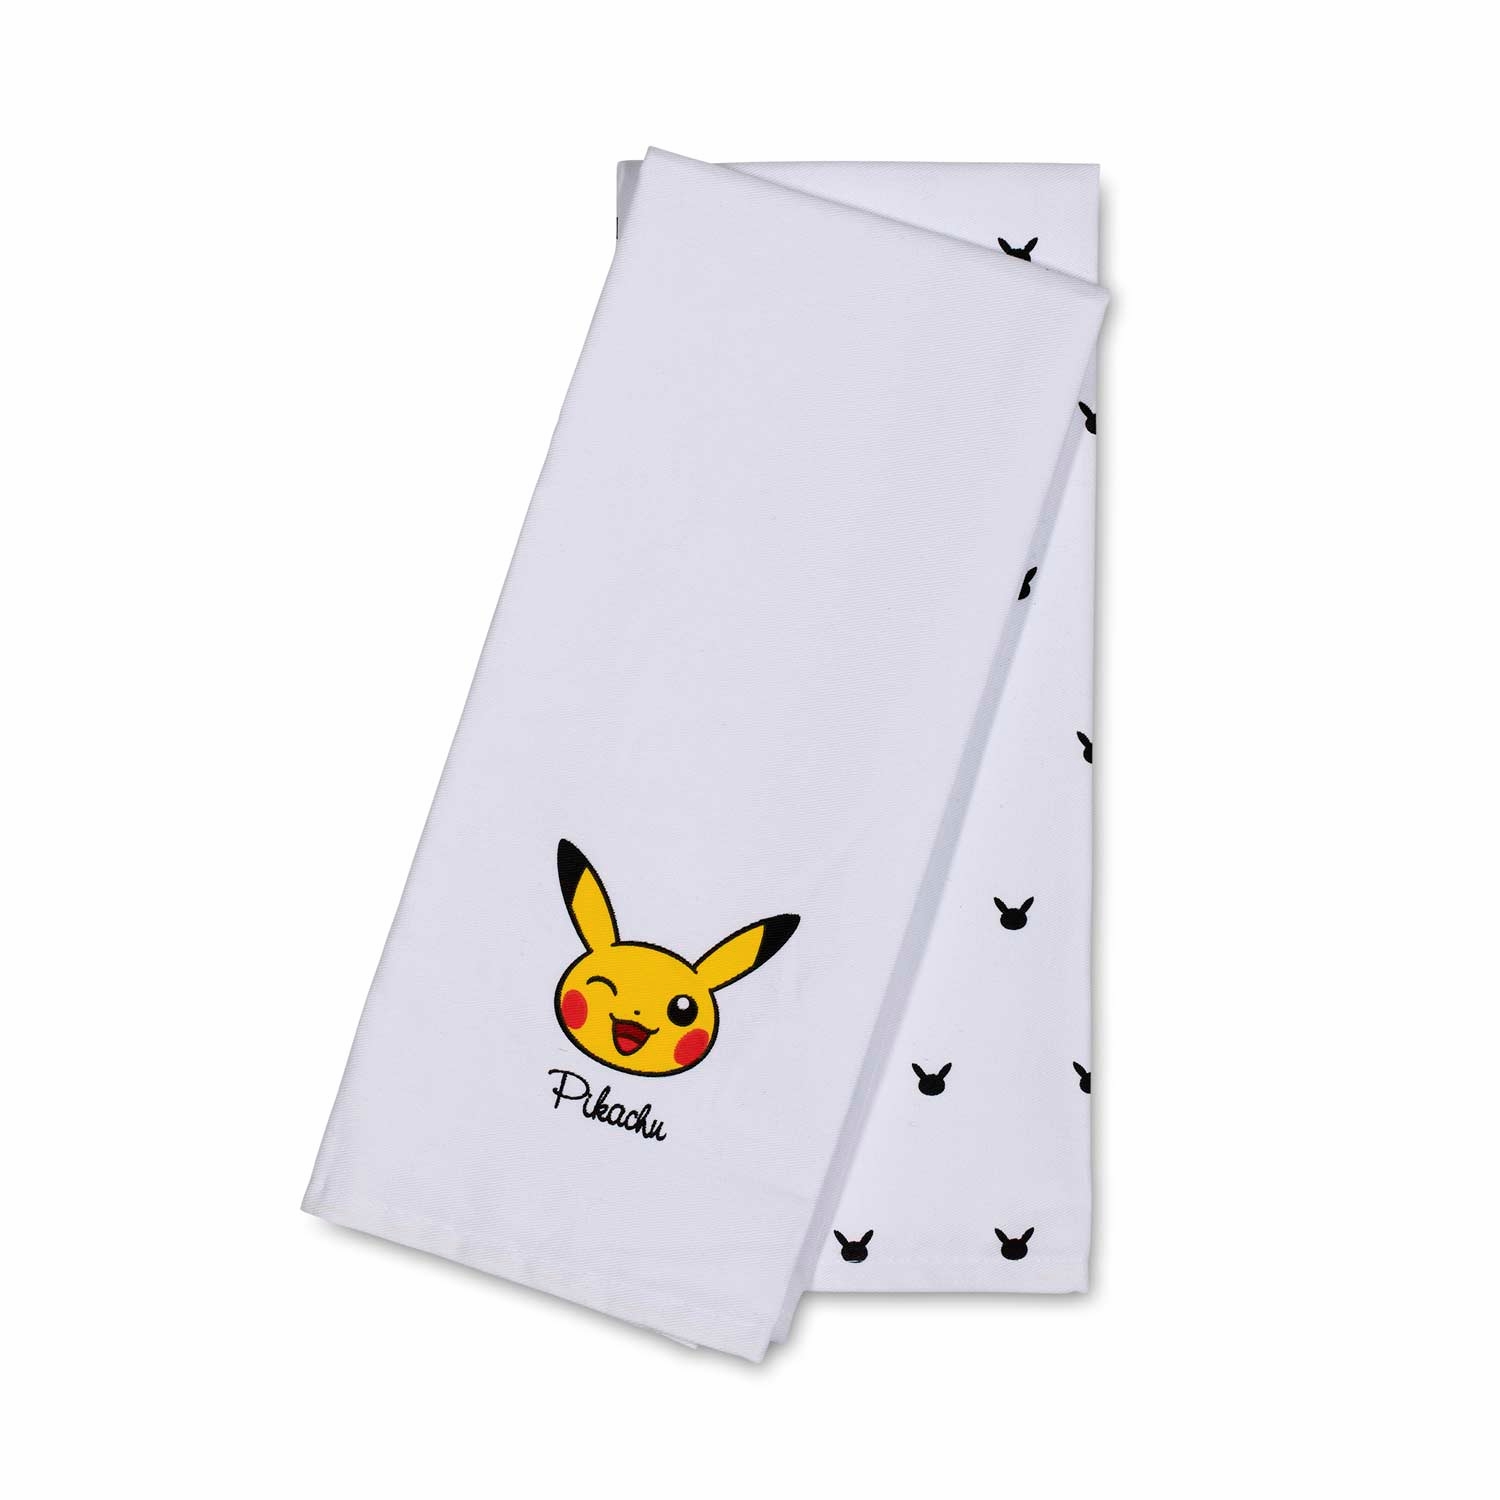 Pikachu_Kitchen_Dish_Towels_Product_Image.jpg